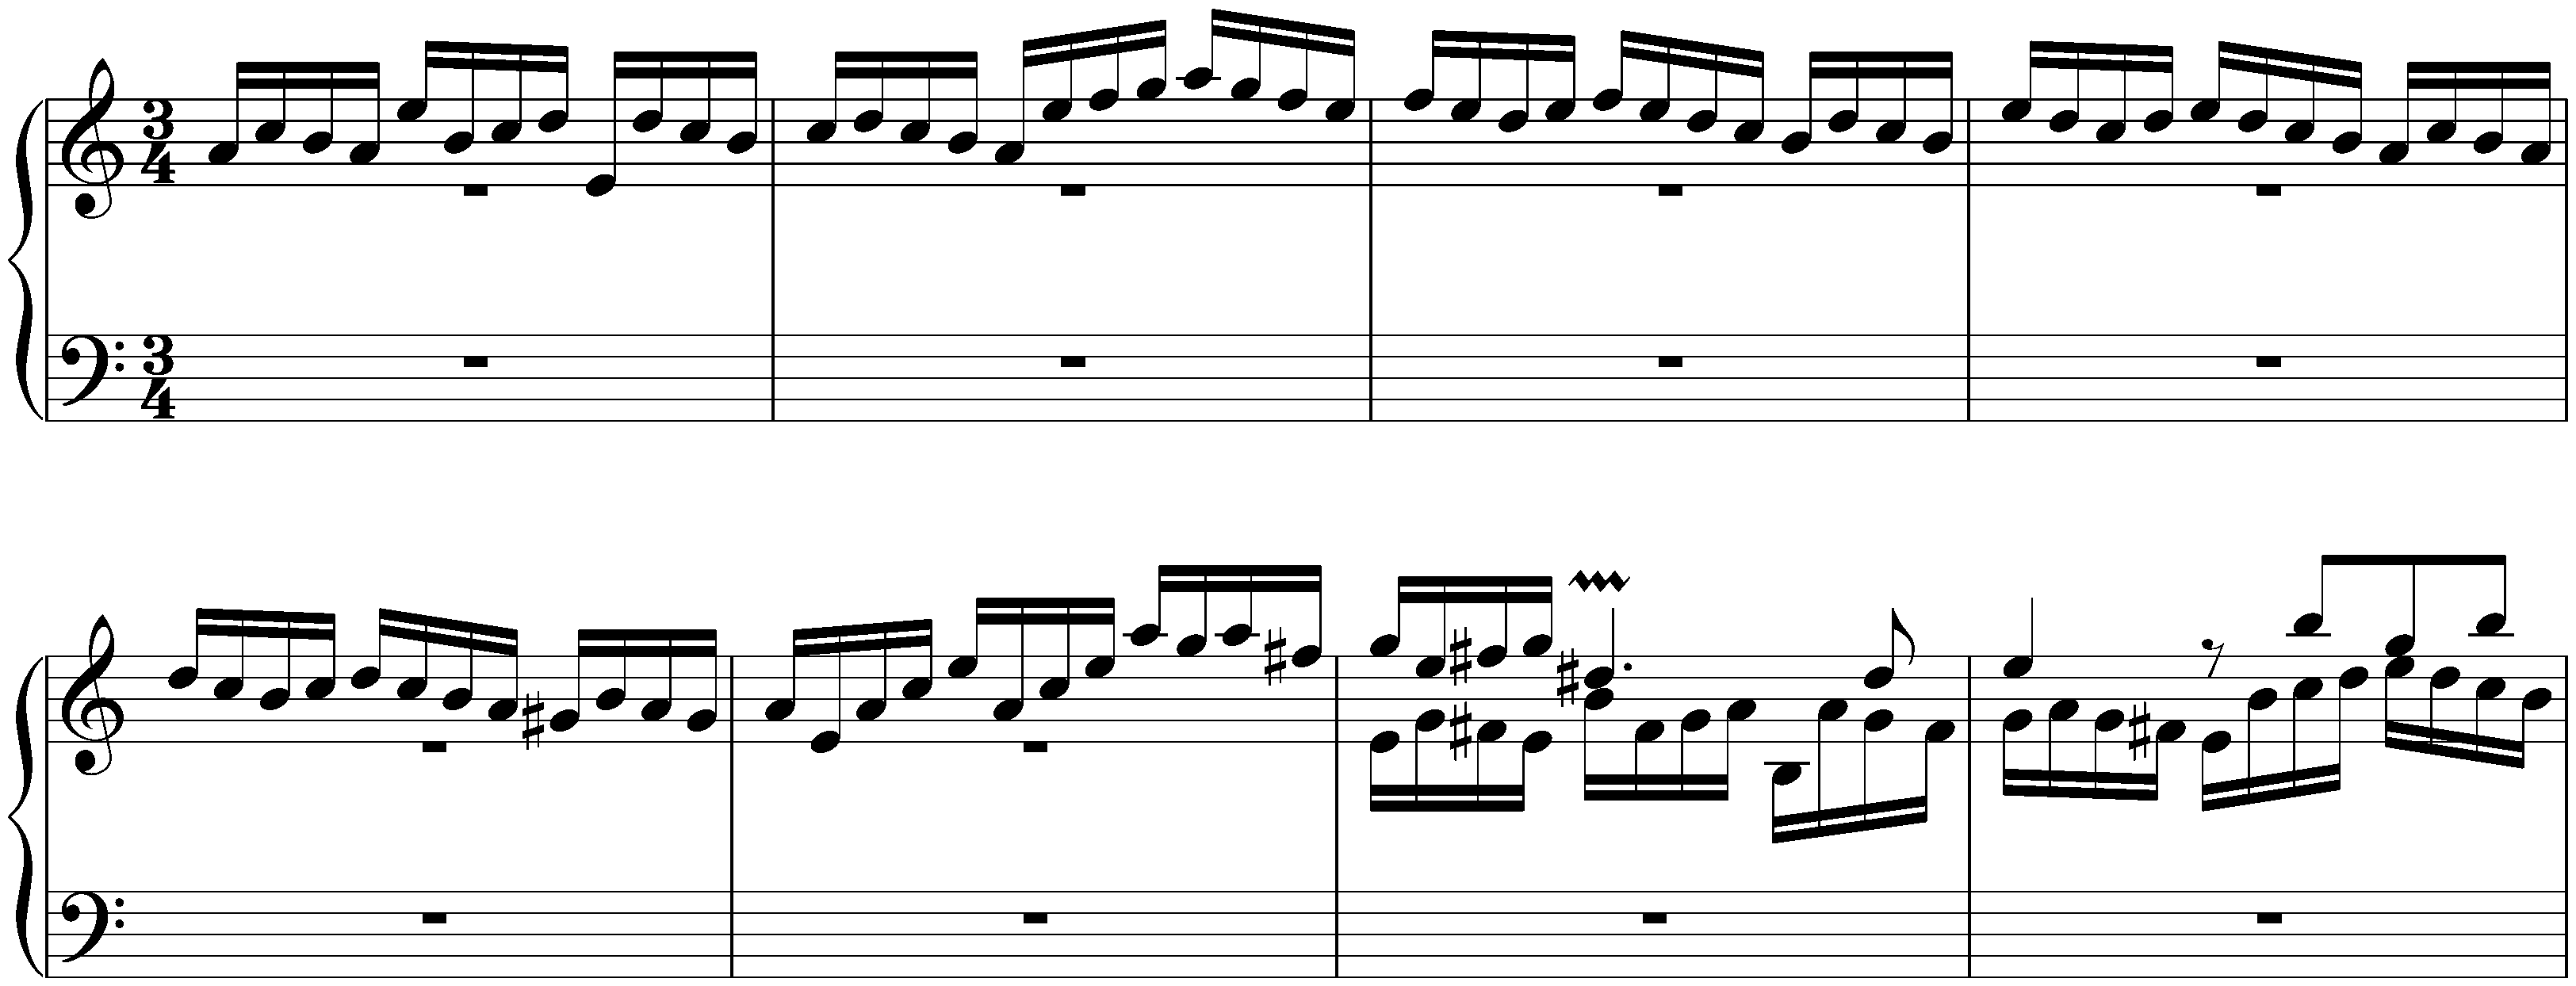 Fantasia and Fugue in A minor, BWV 944; 2. Fugue